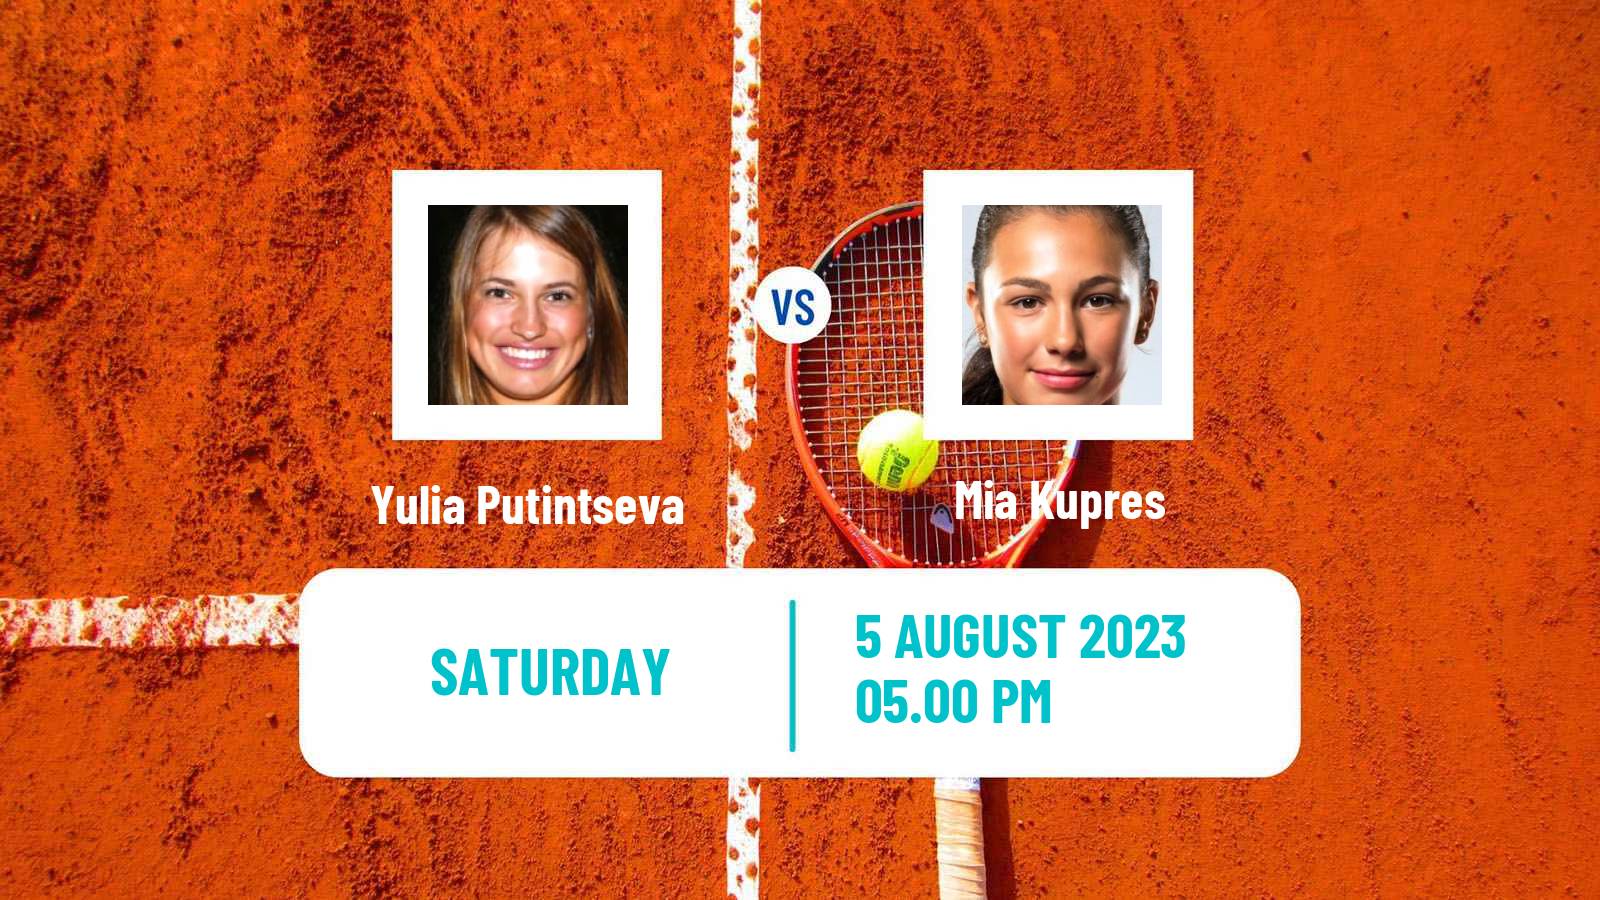 Tennis WTA Montreal Yulia Putintseva - Mia Kupres